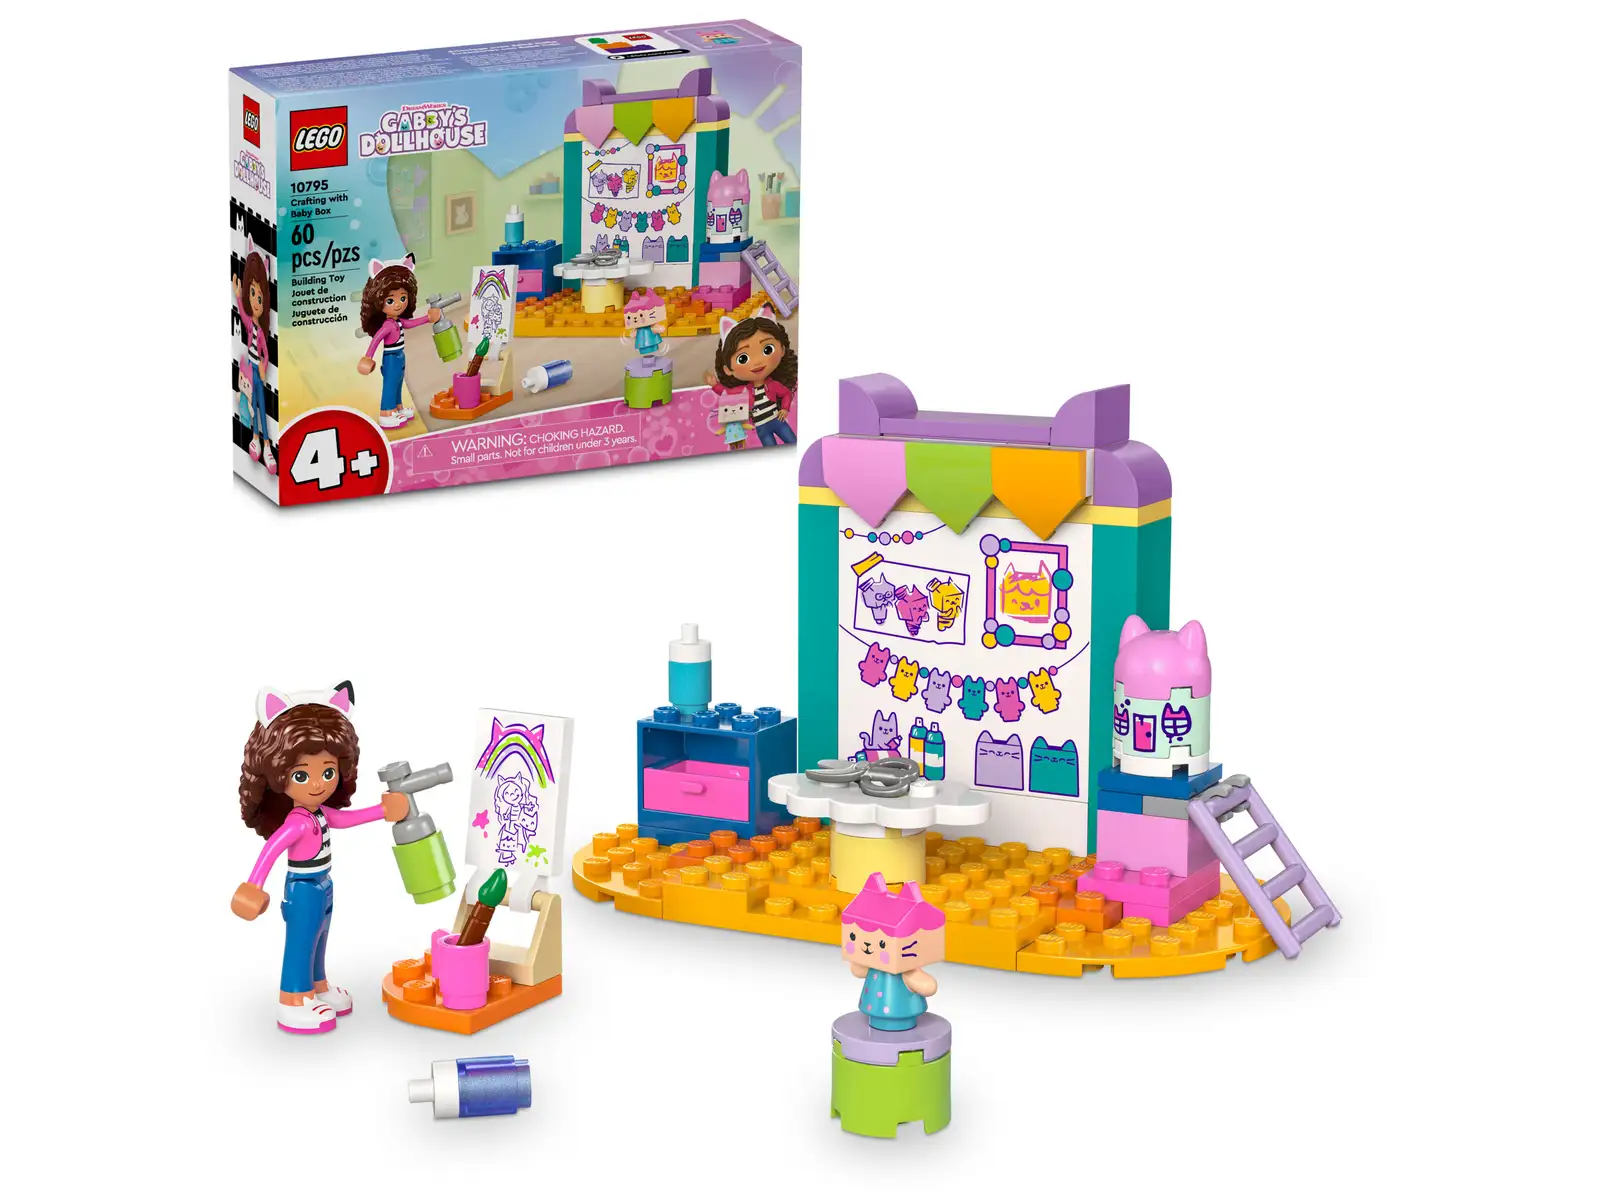 LEGO 10795 Lag ting med Baby Boks 10795 - Lego Gabby’s Dollhouse